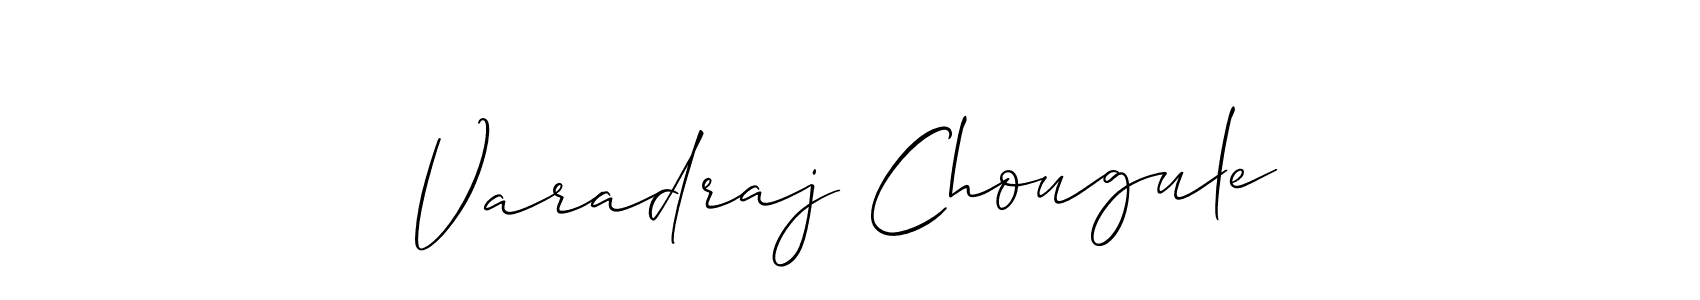 How to make Varadraj Chougule signature? Allison_Script is a professional autograph style. Create handwritten signature for Varadraj Chougule name. Varadraj Chougule signature style 2 images and pictures png